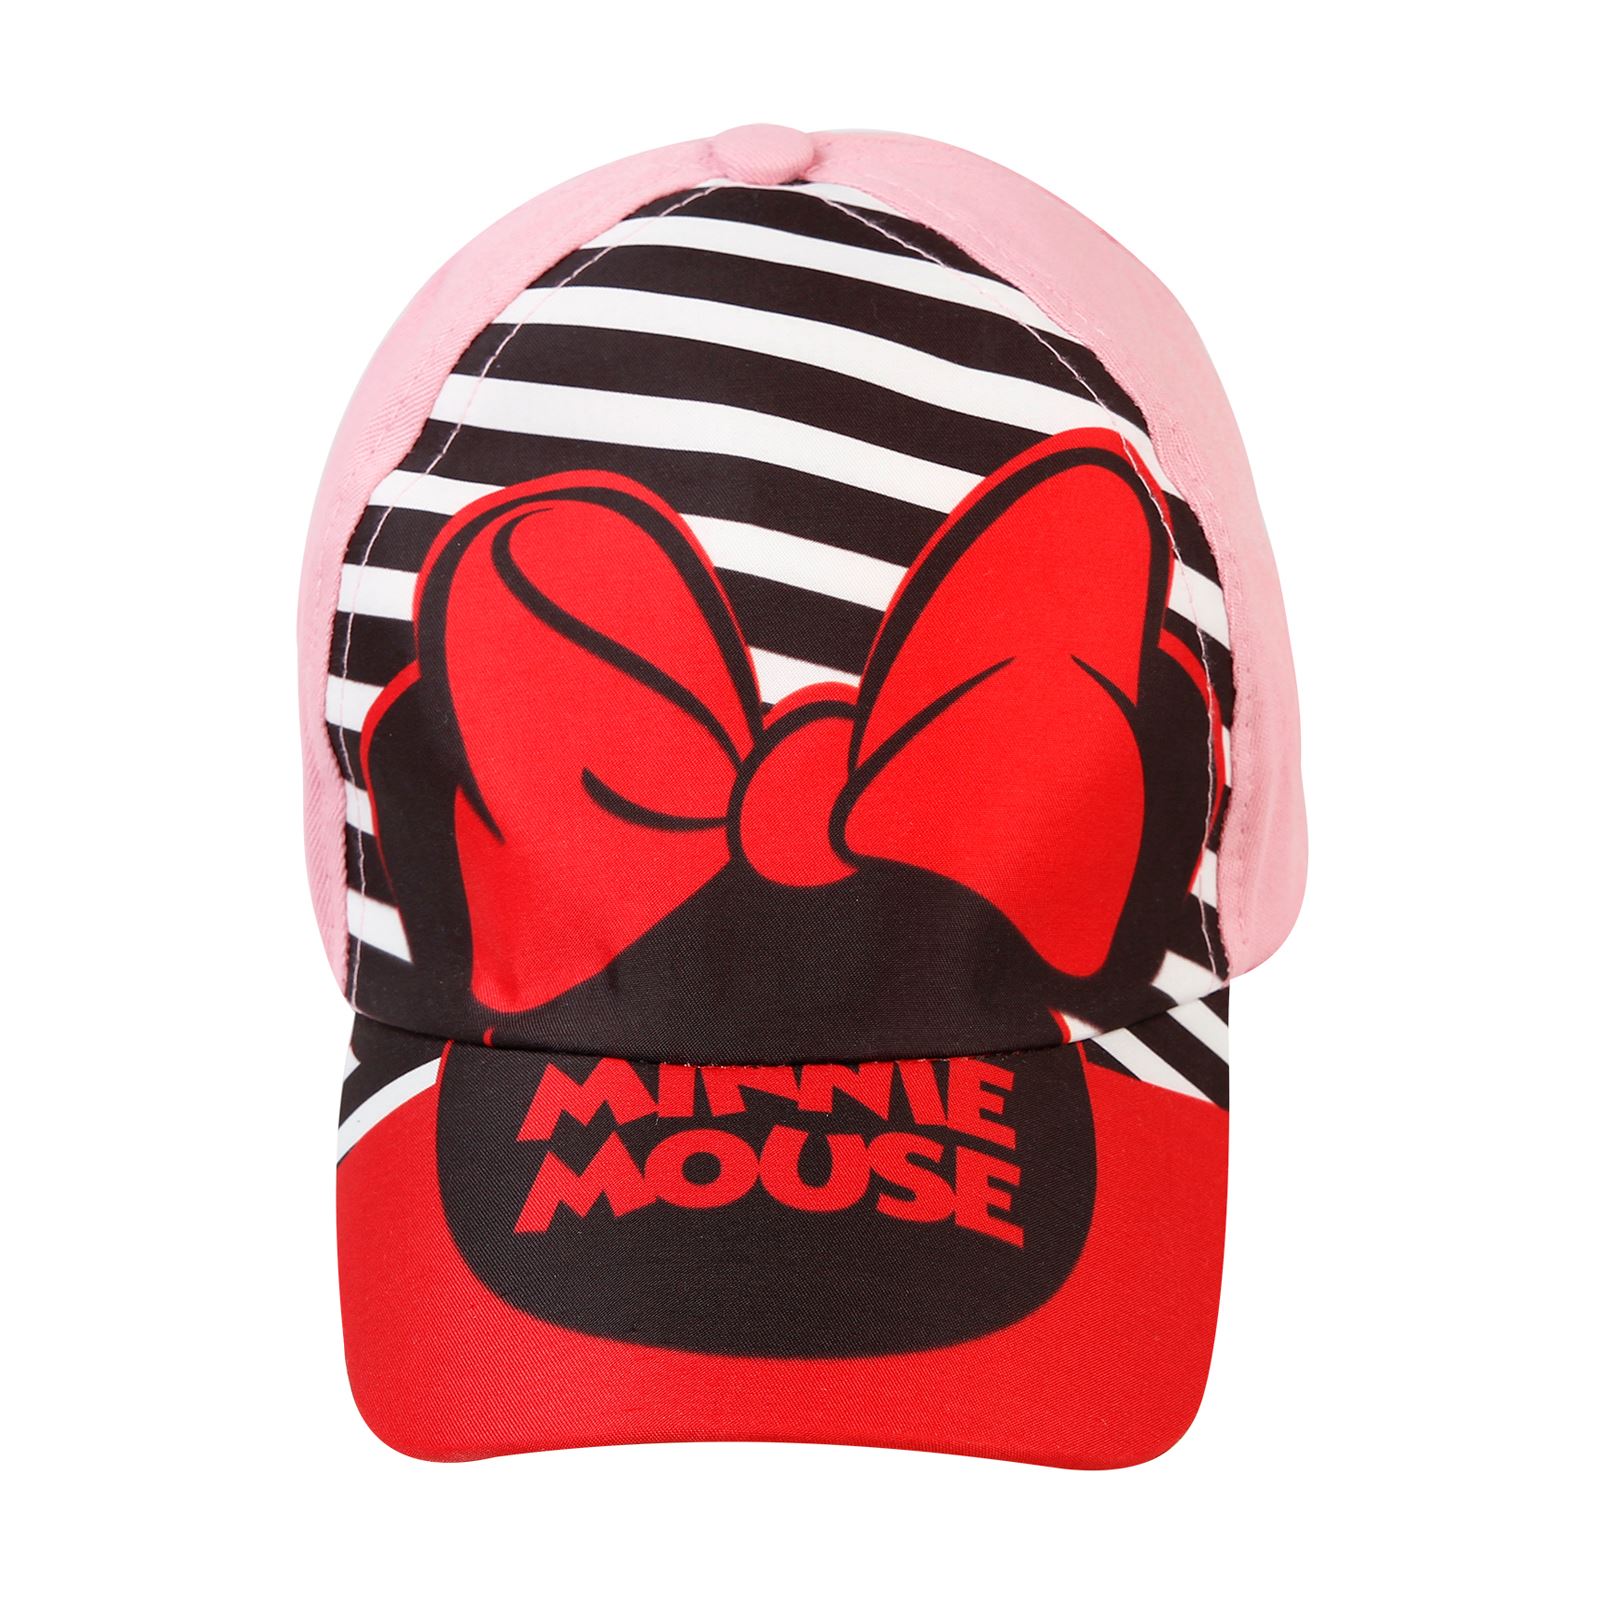 Minnie Mouse Kız Çocuk Şapka 2-4 Yaş Pembe